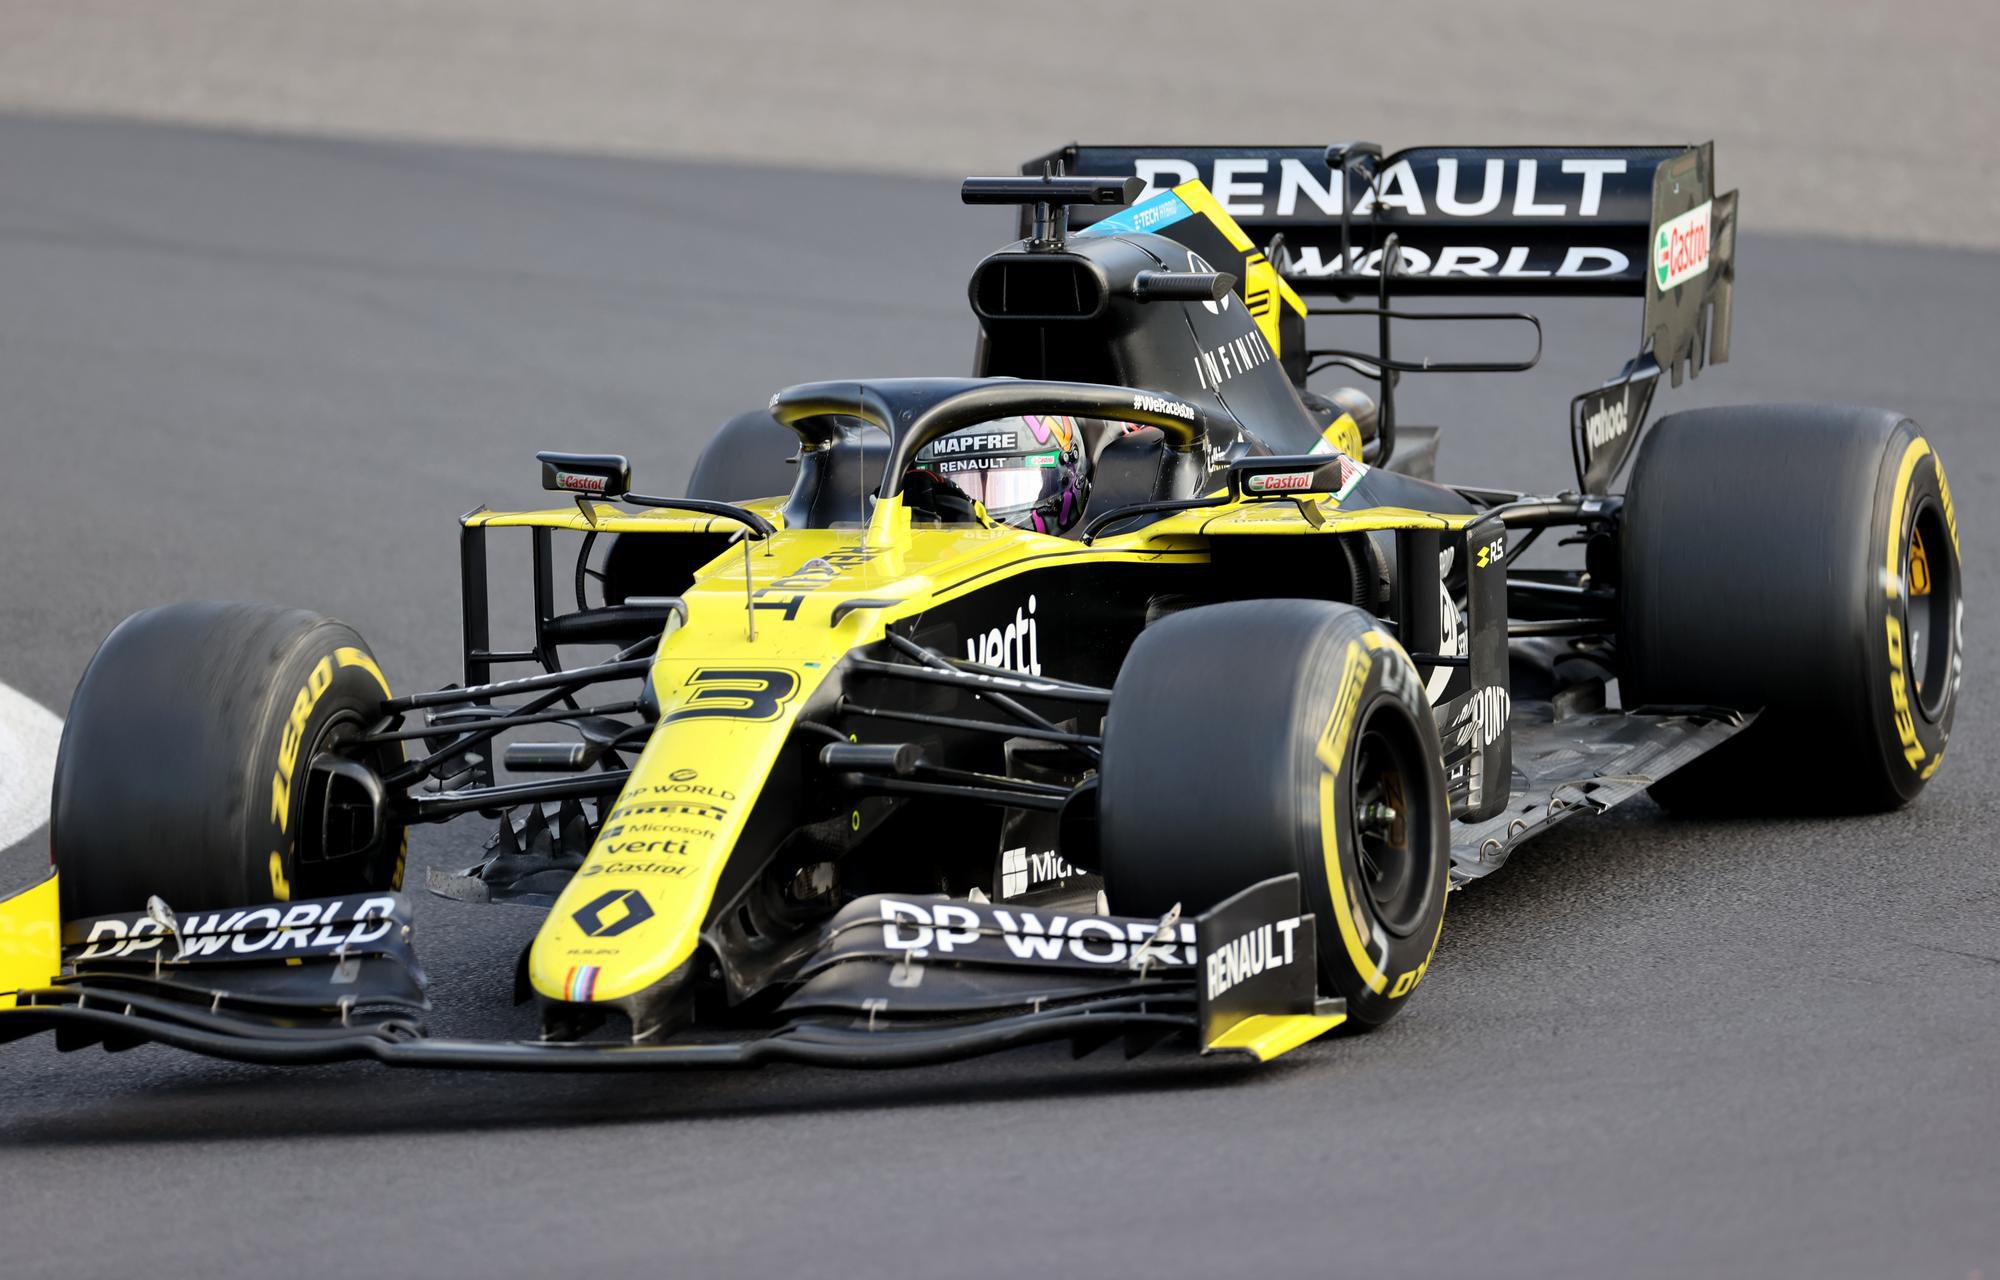 Daniel Ricciardo, Renault F1 Team